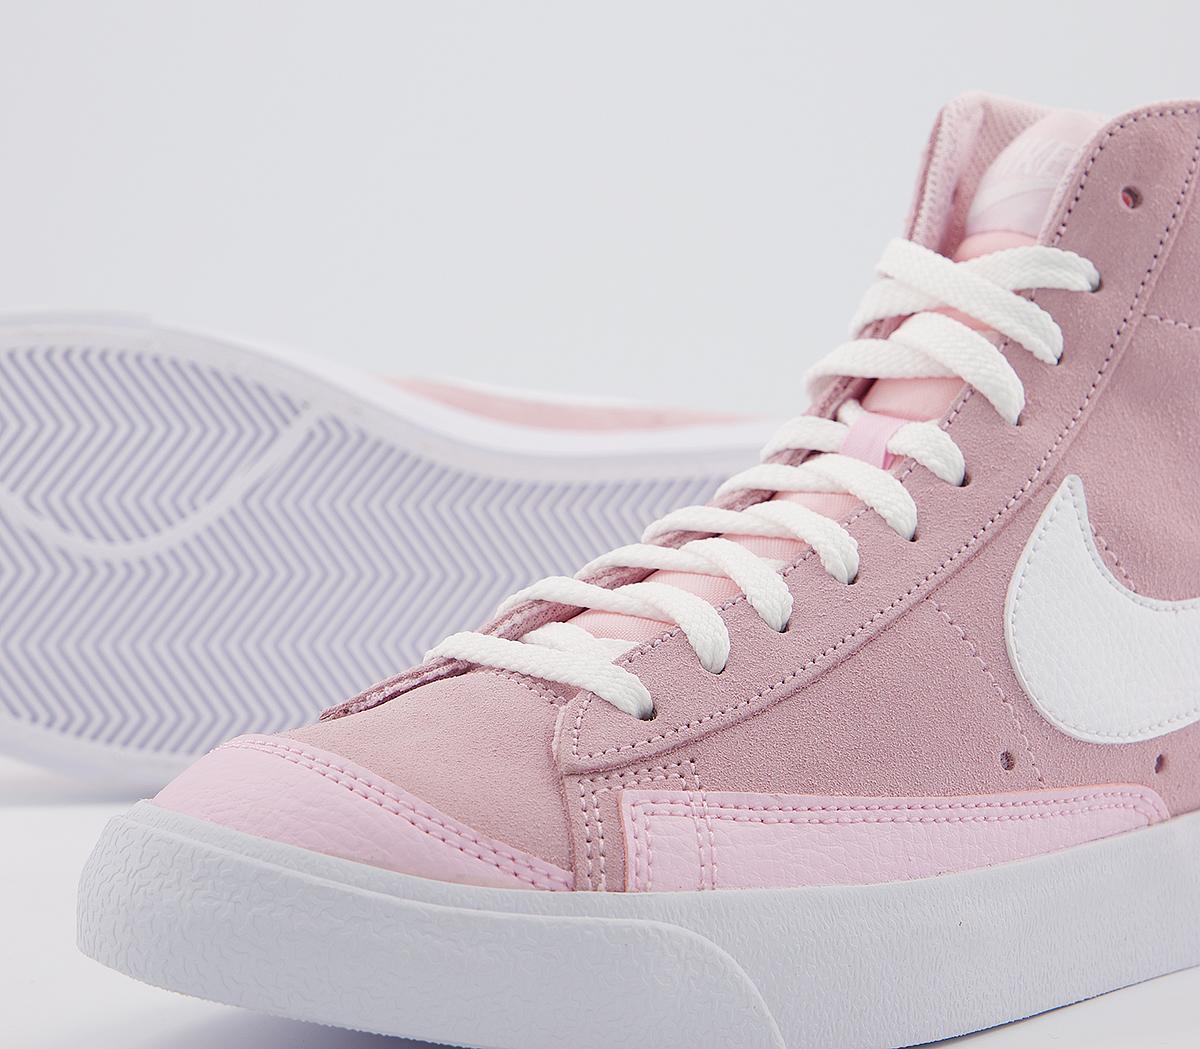 Nike Blazer Mid 77 Trainers Pink Foam Pink Foam - Hers trainers